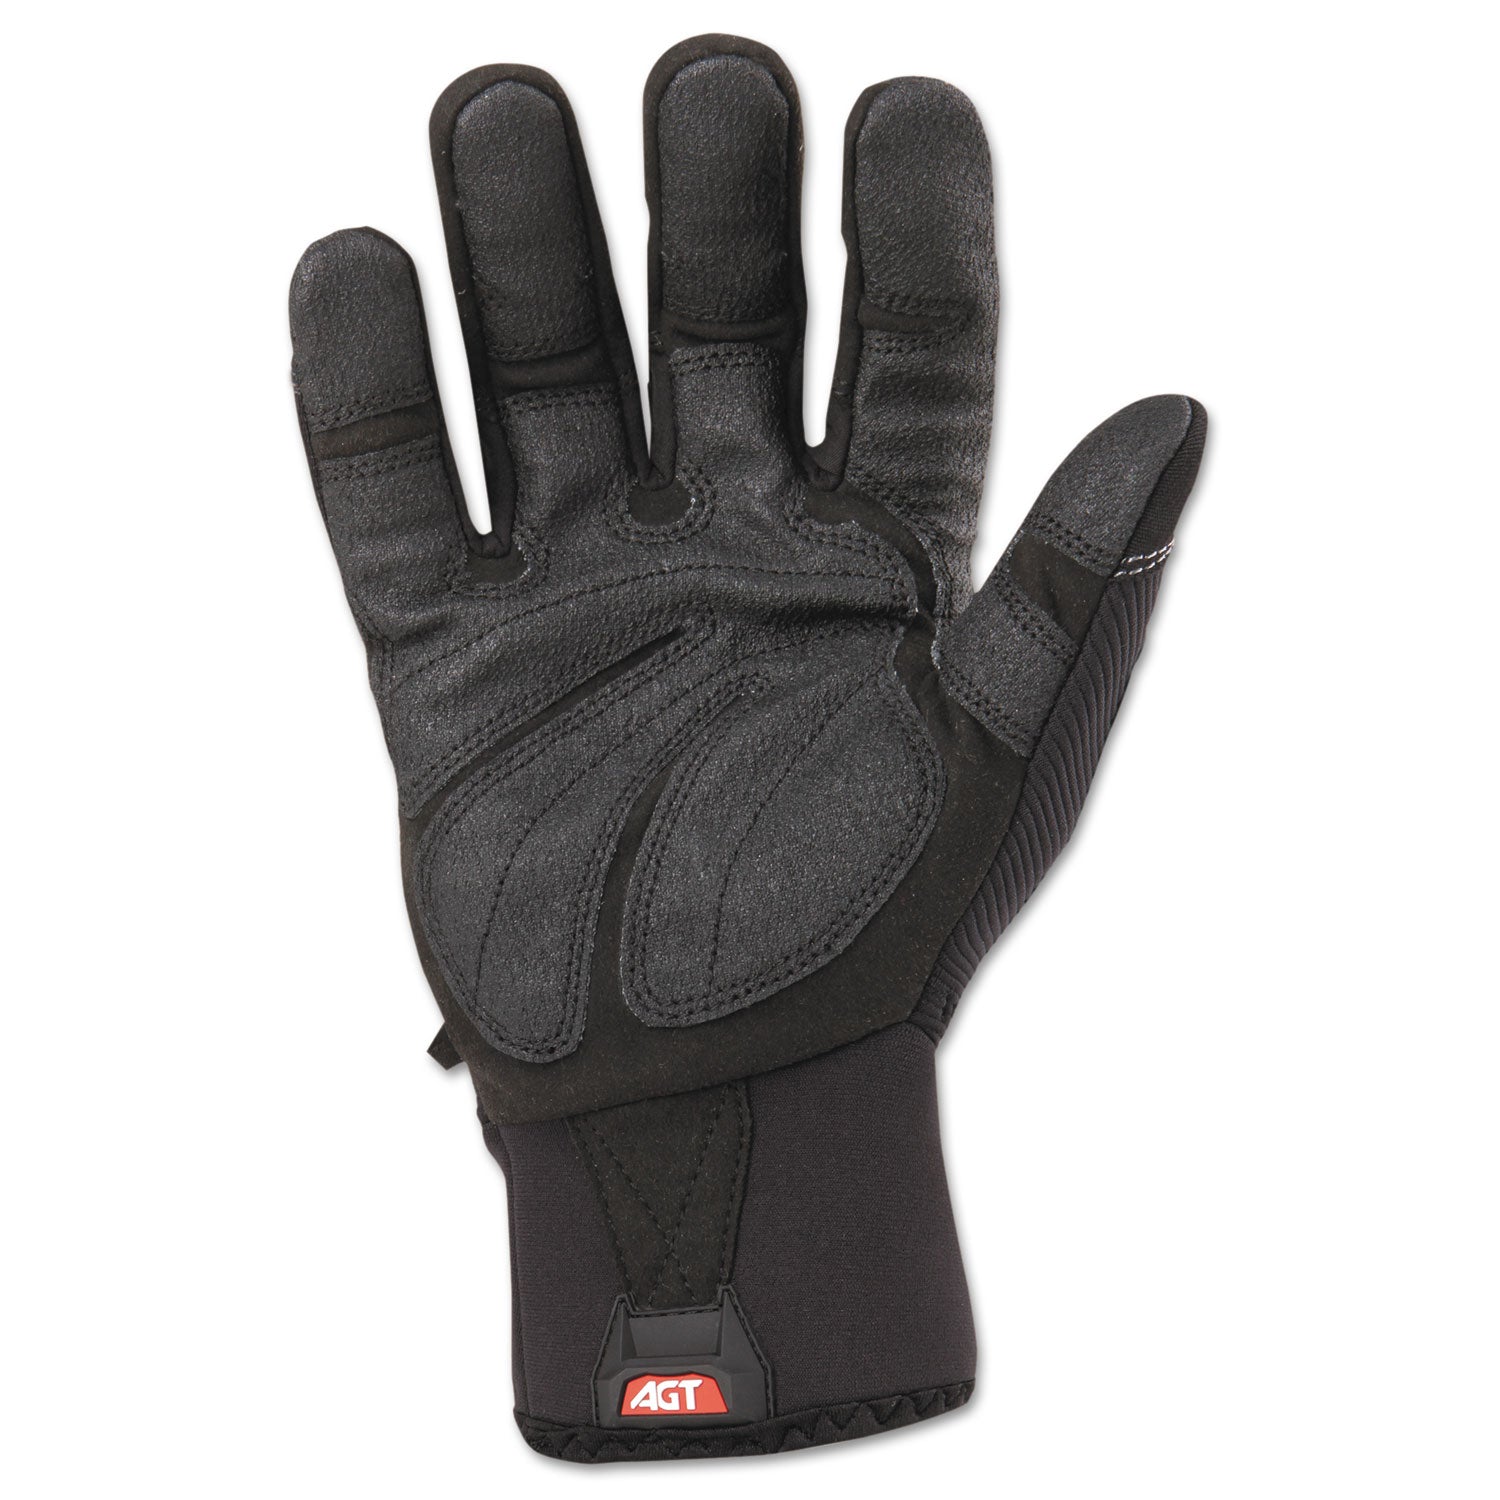 Cold Condition Gloves, Black, Medium - 